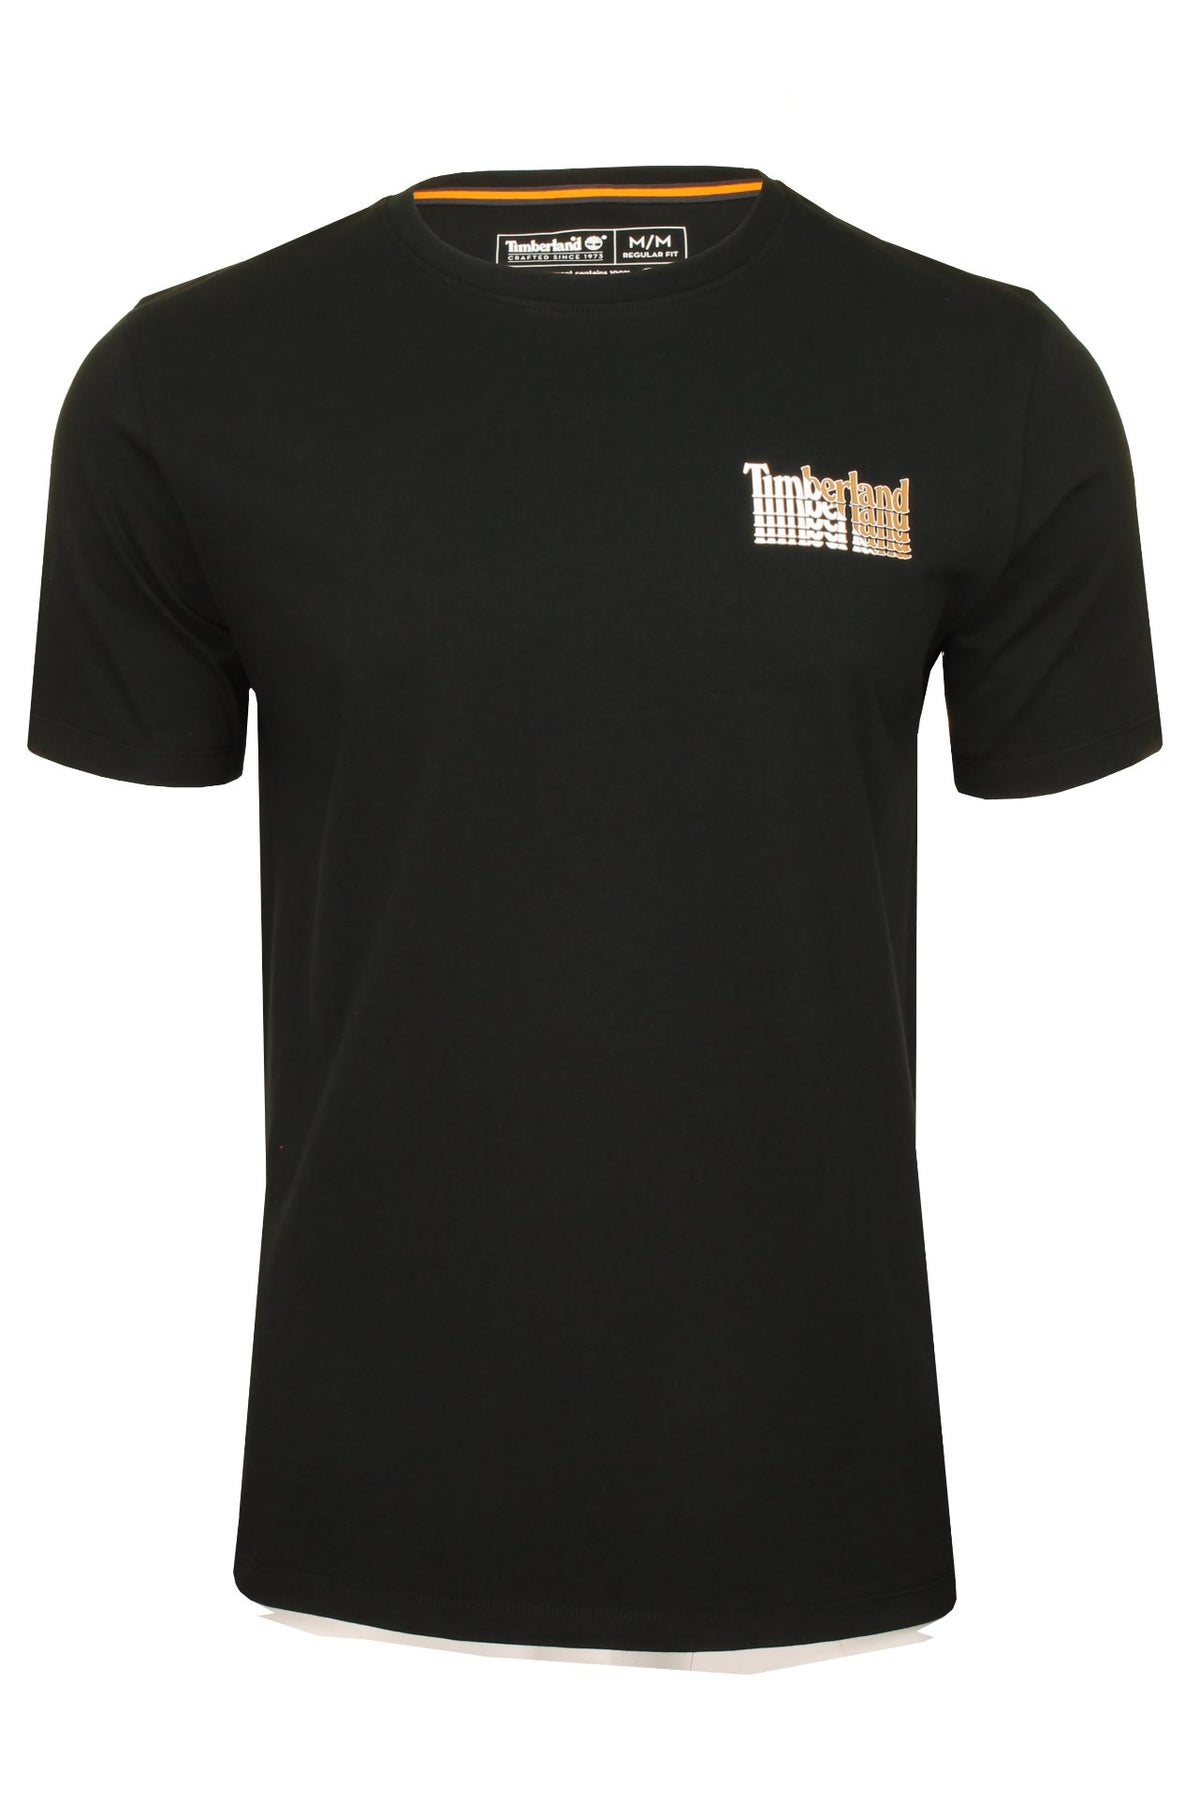 Timberland Men's Stacked Logo Back Print T-Shirt - Short Sleeved, 01, Tb0A2E65, Black